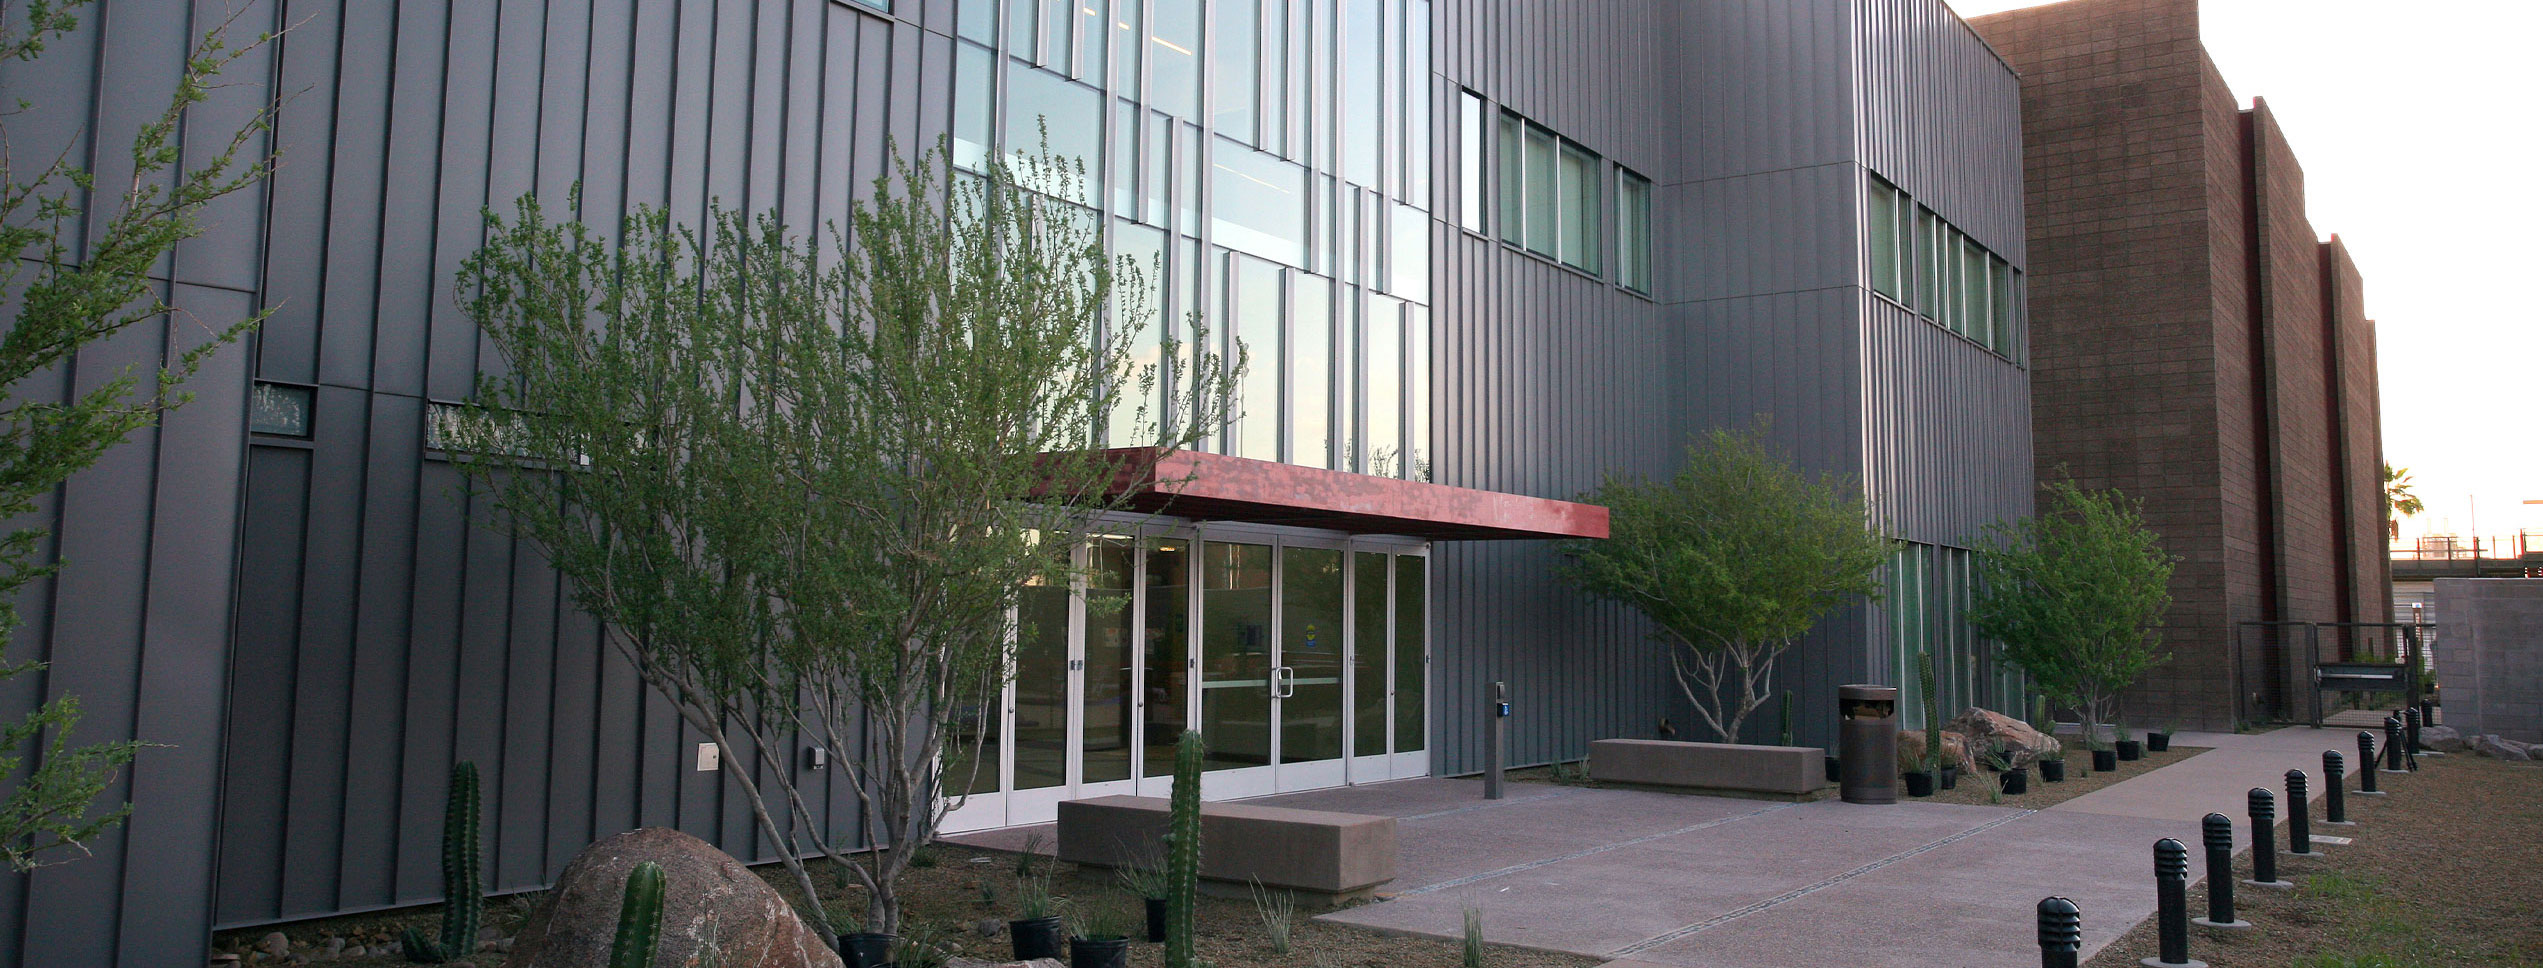 Arizona State University Weatherup Center